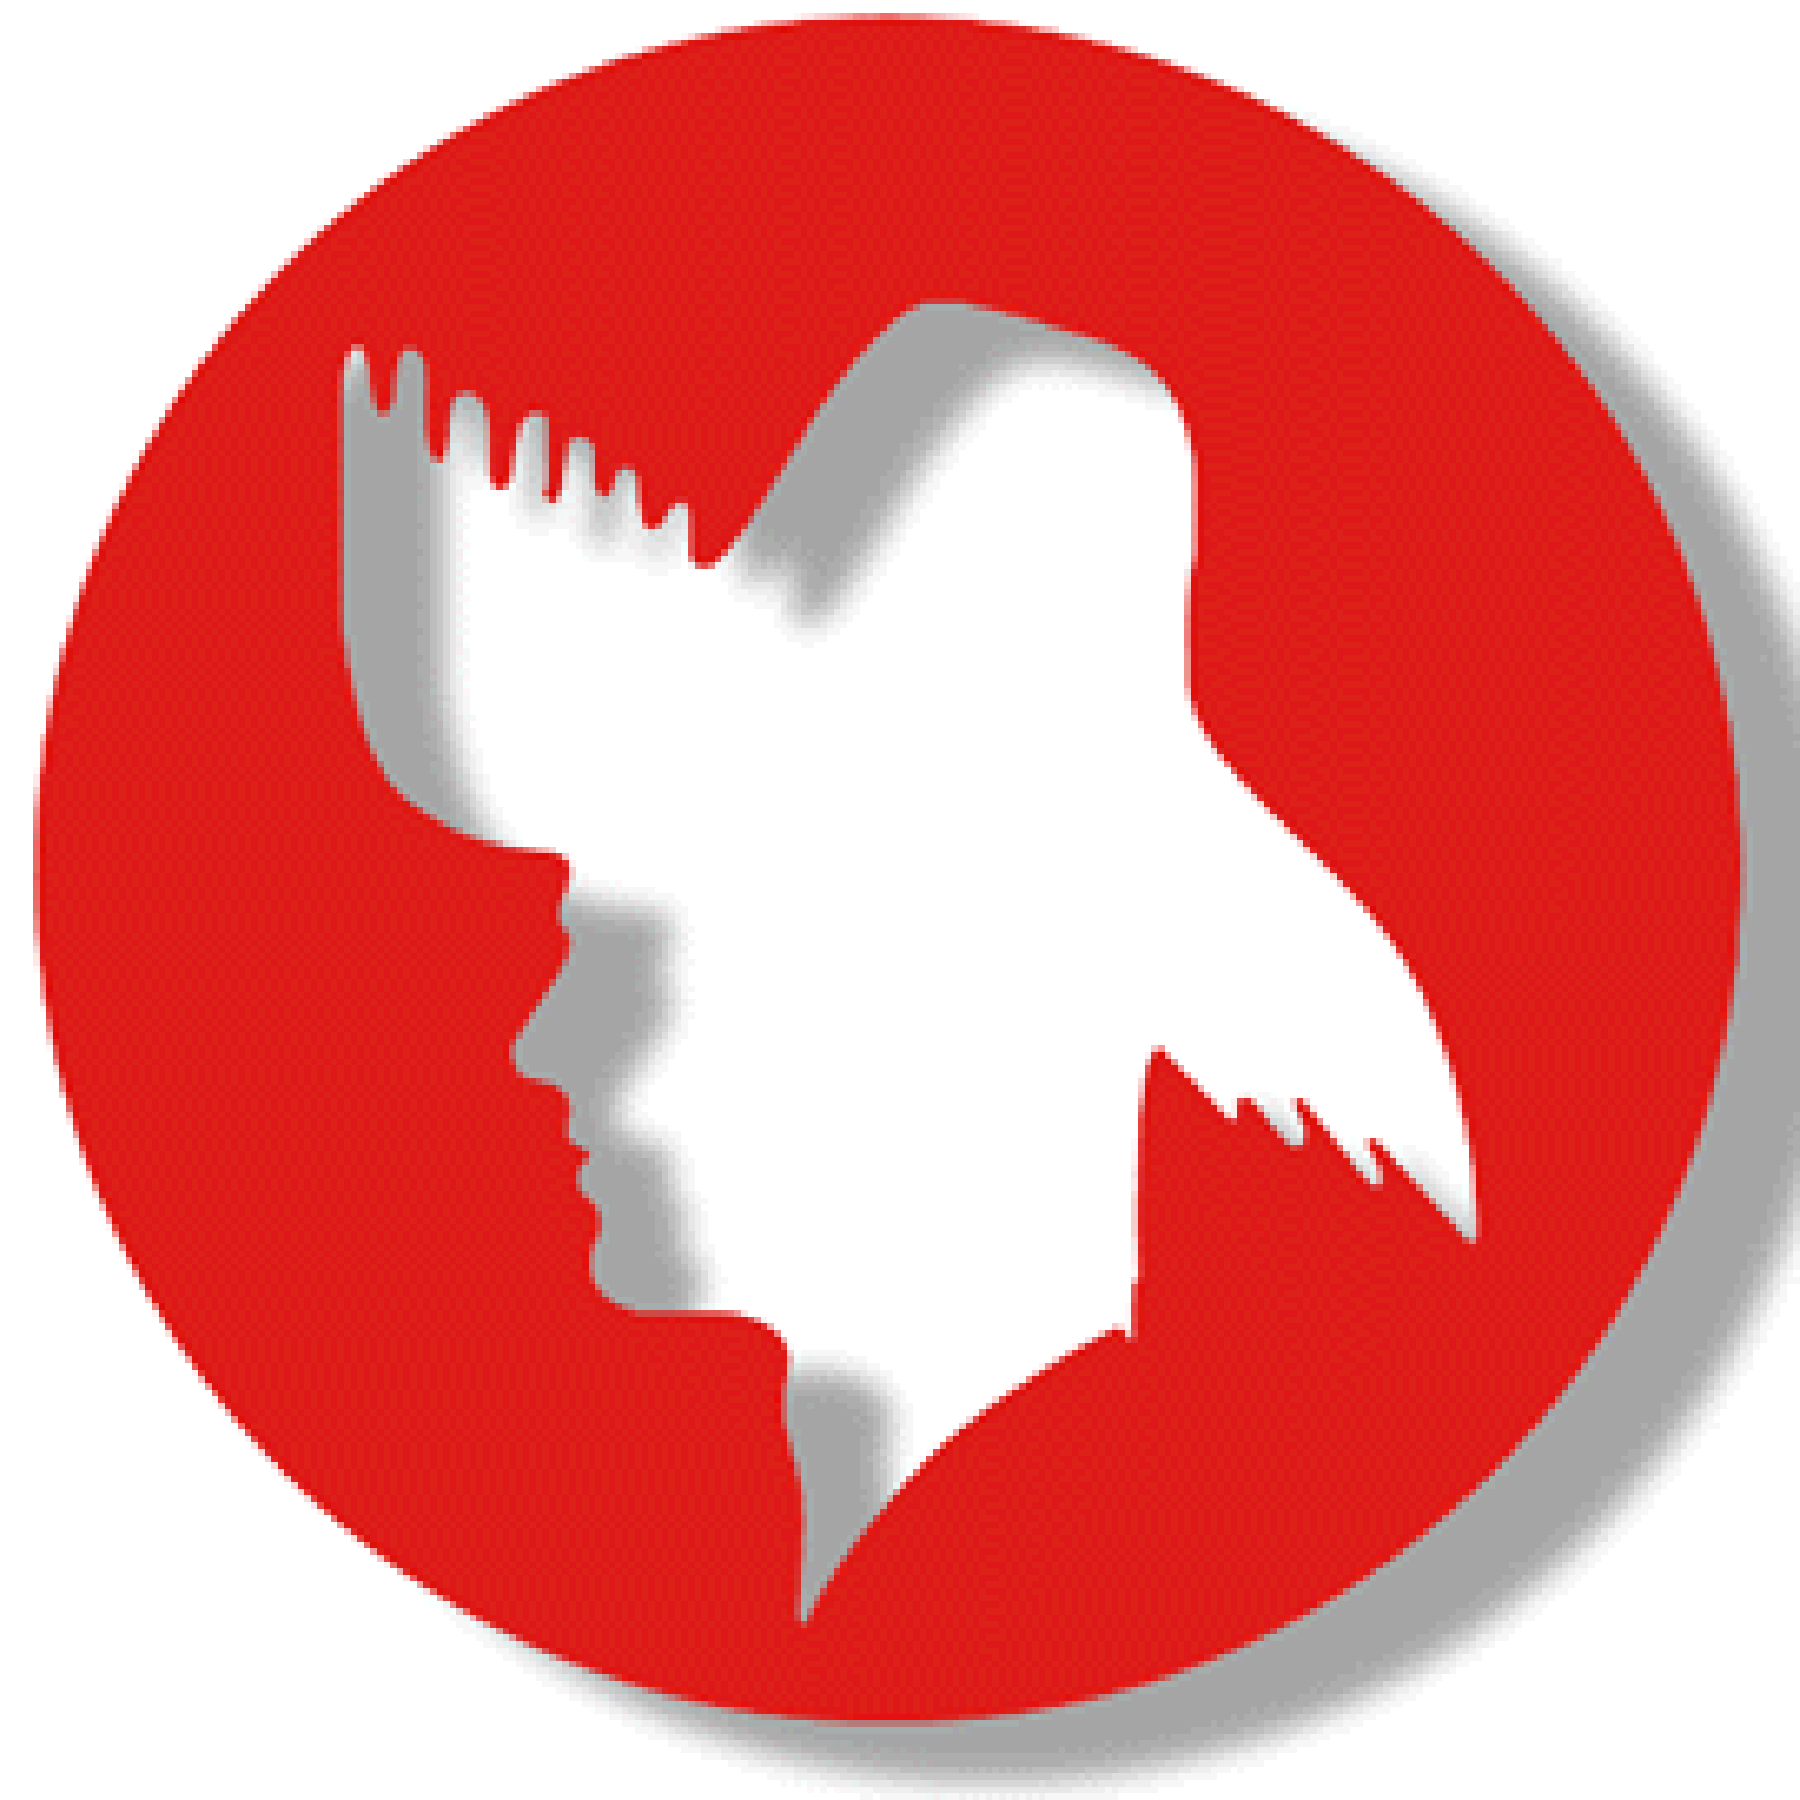 PPD Logo - PPD logo. LA CHULETA CONGELÁ'